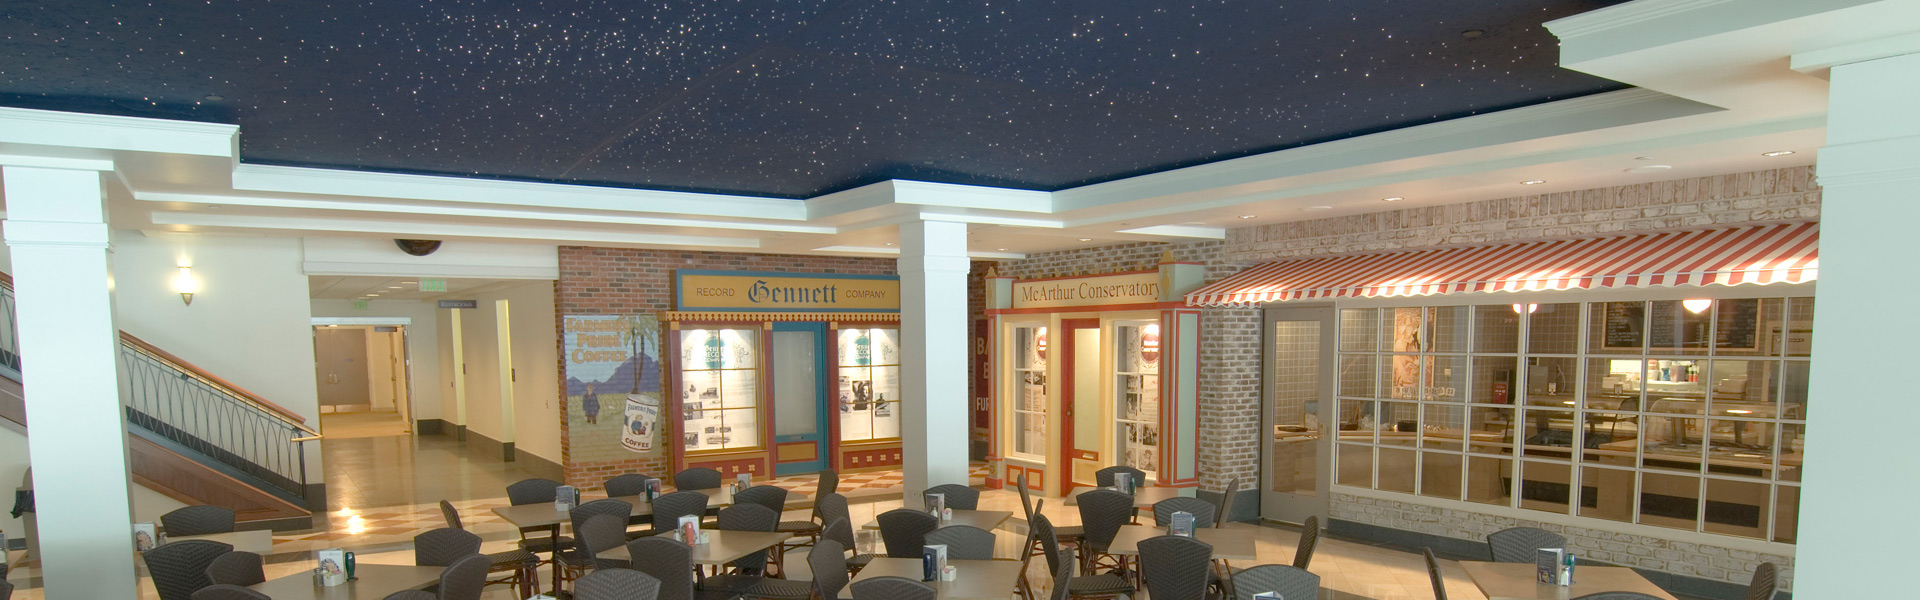 Stardust Terrace Cafe